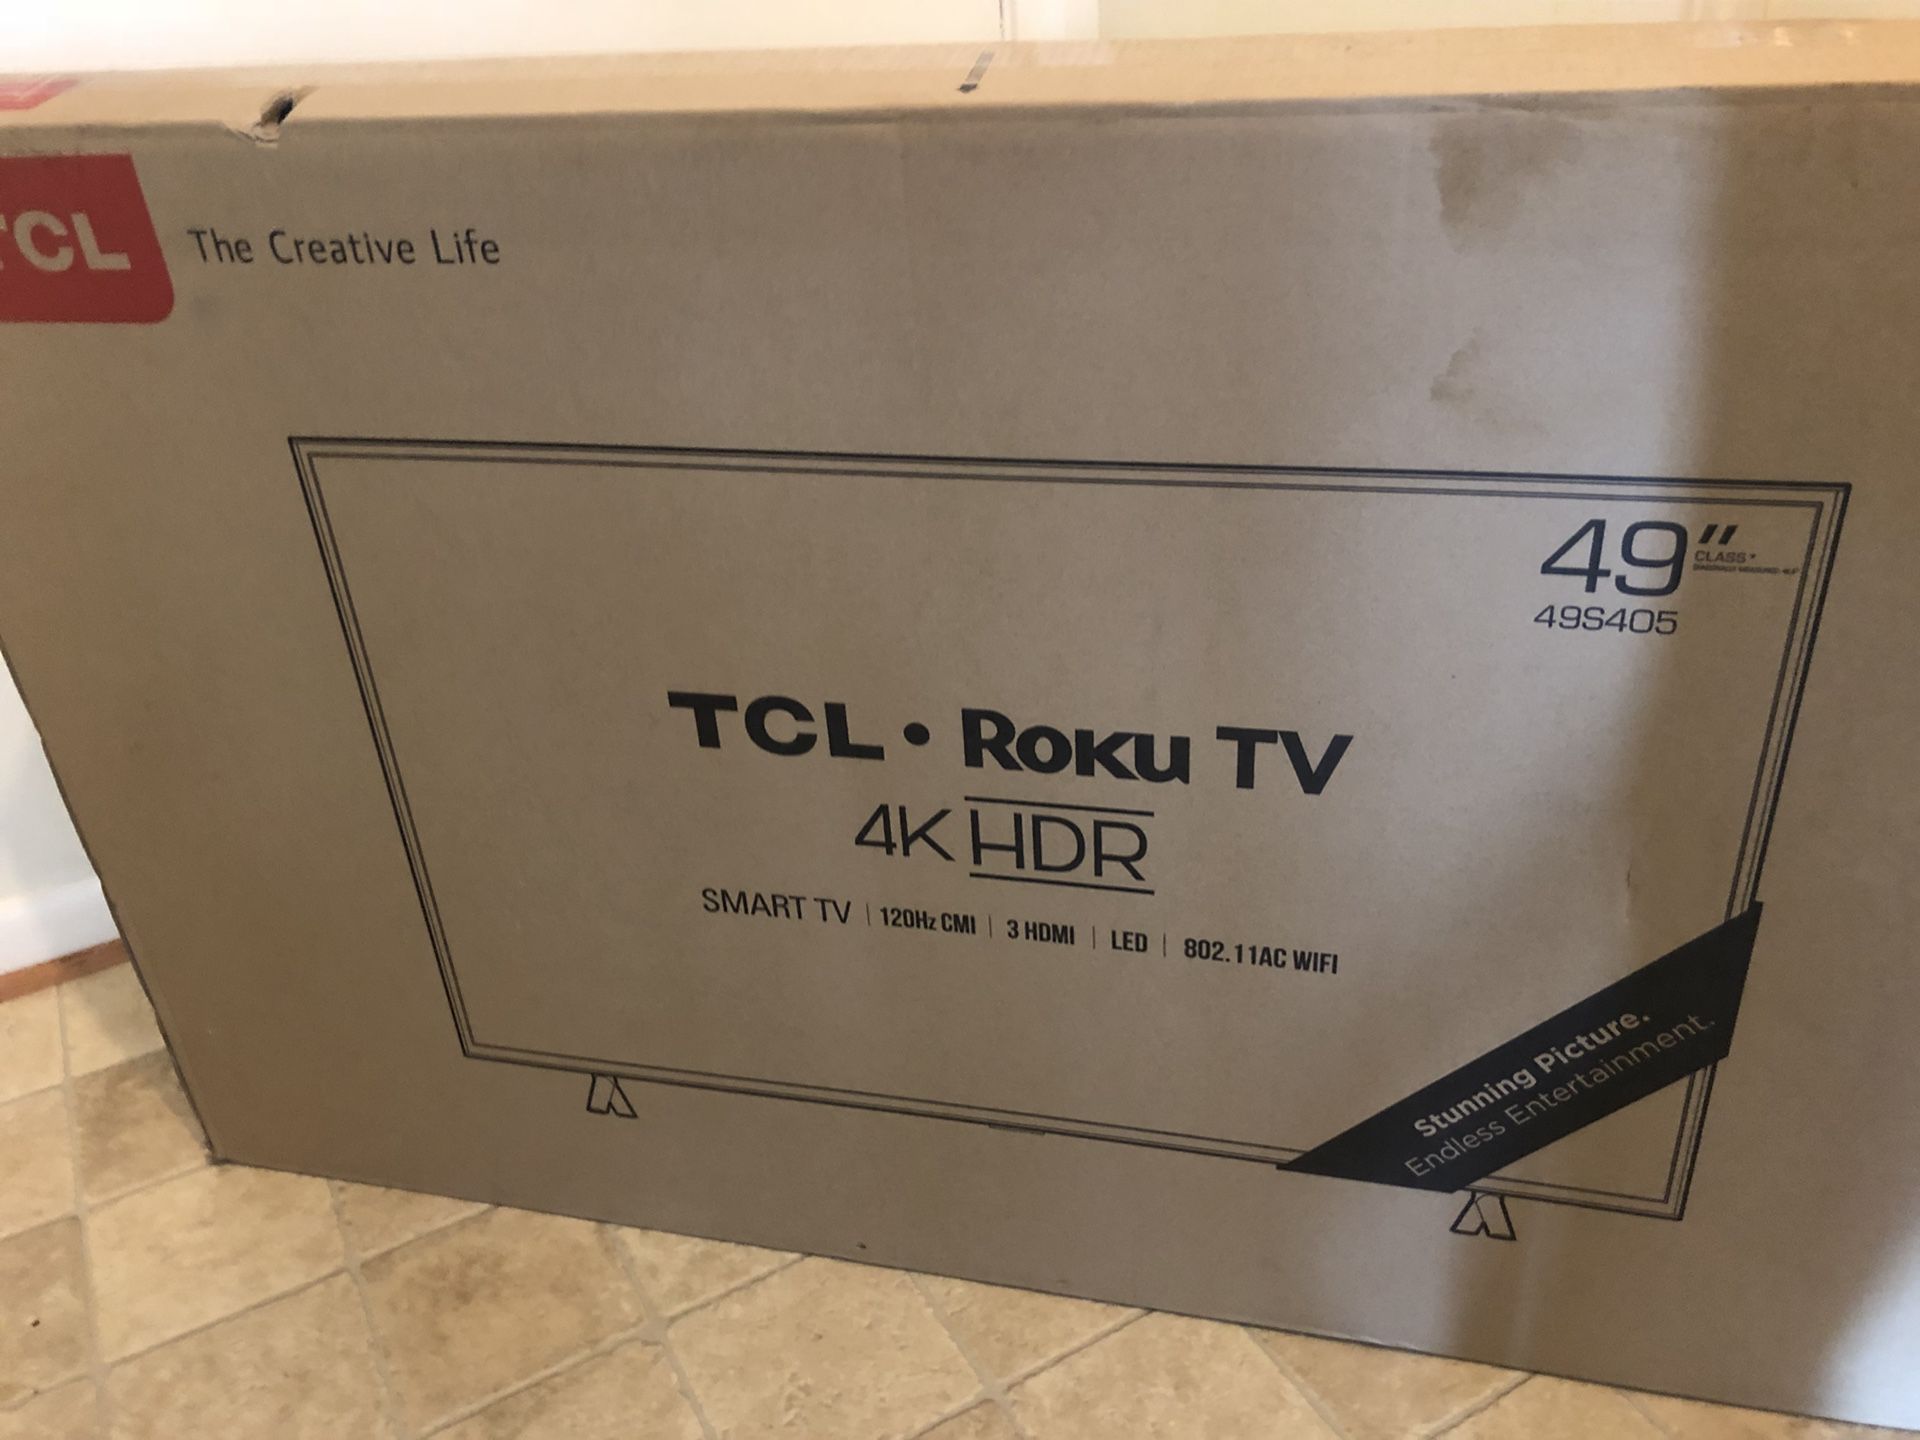 New 49" 4K HDR SMART TV LED ROKU TV